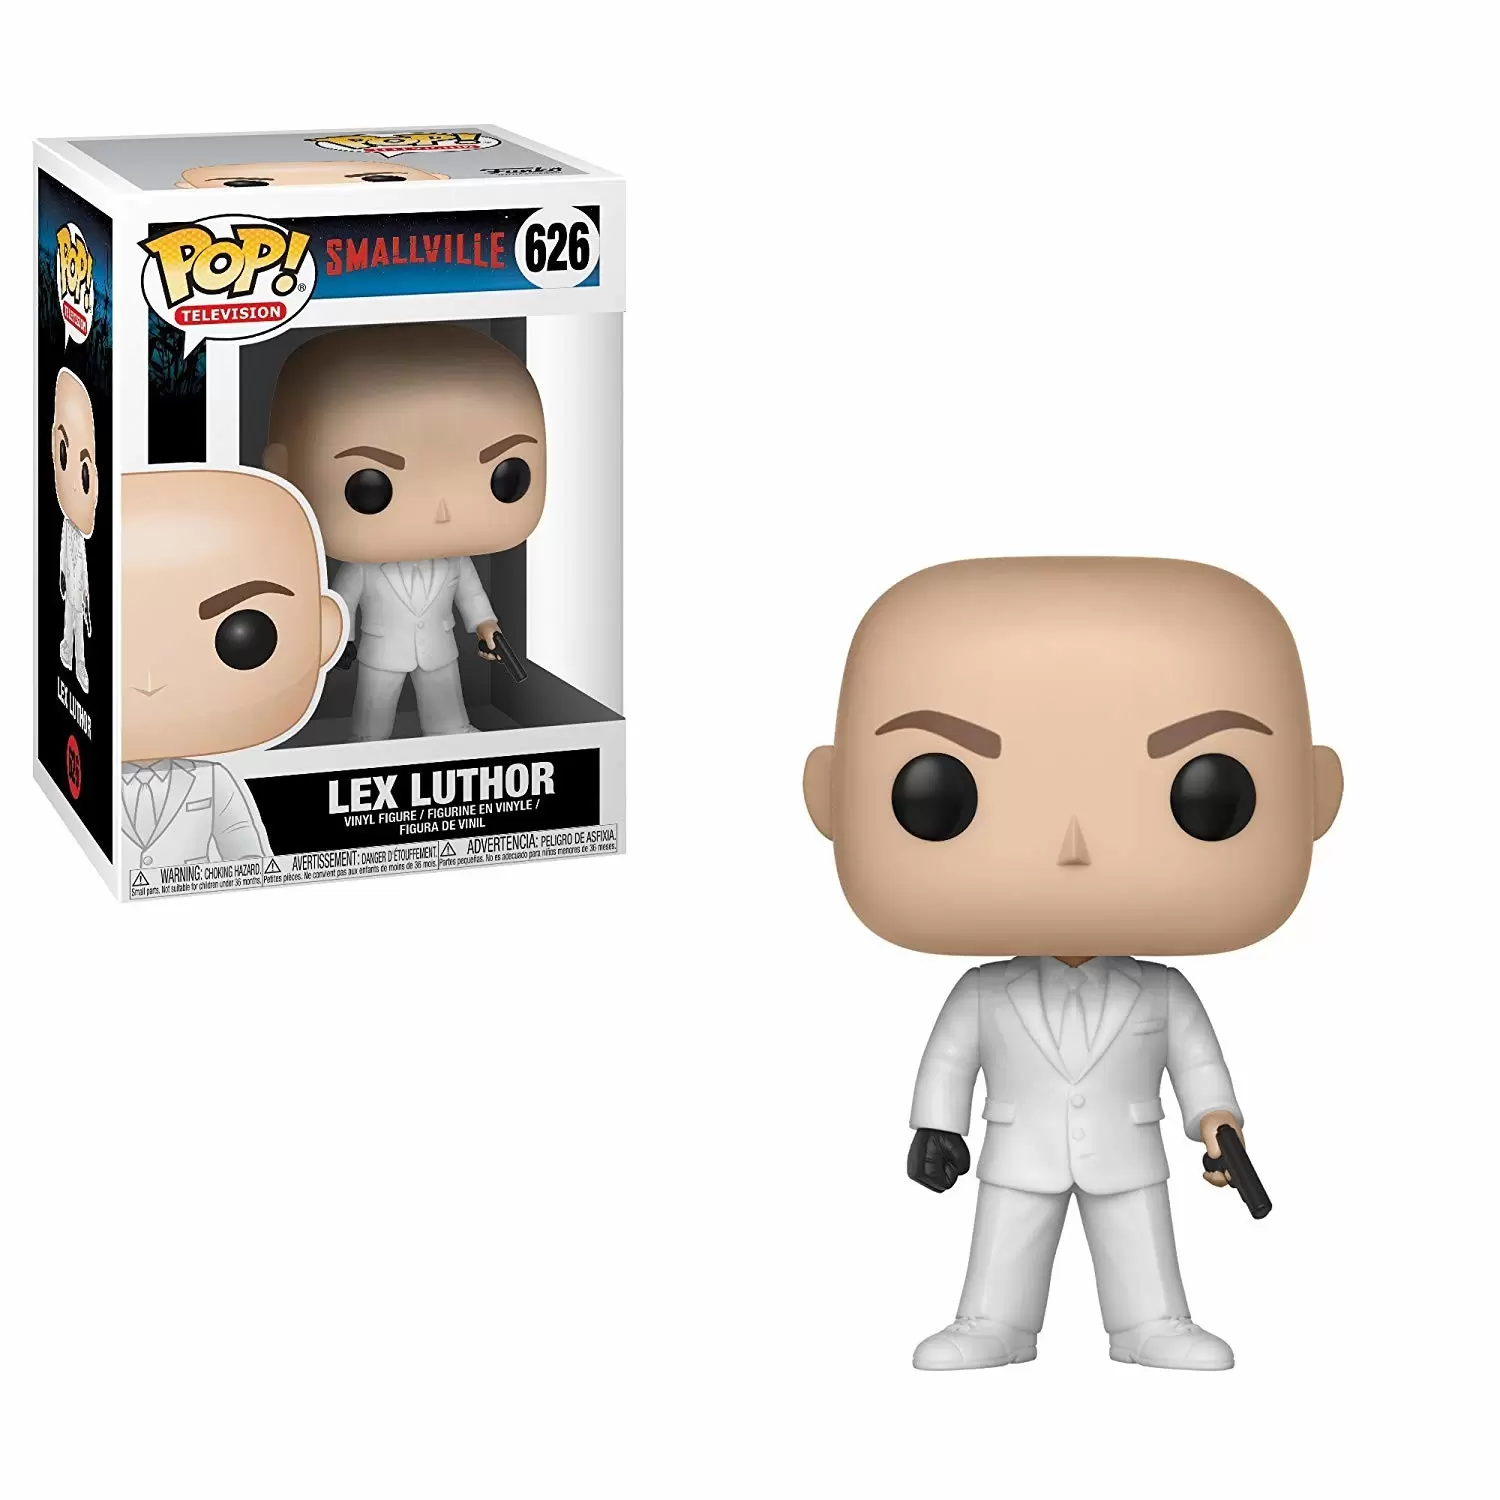 POP! Television - Smallville - Lex Luthor